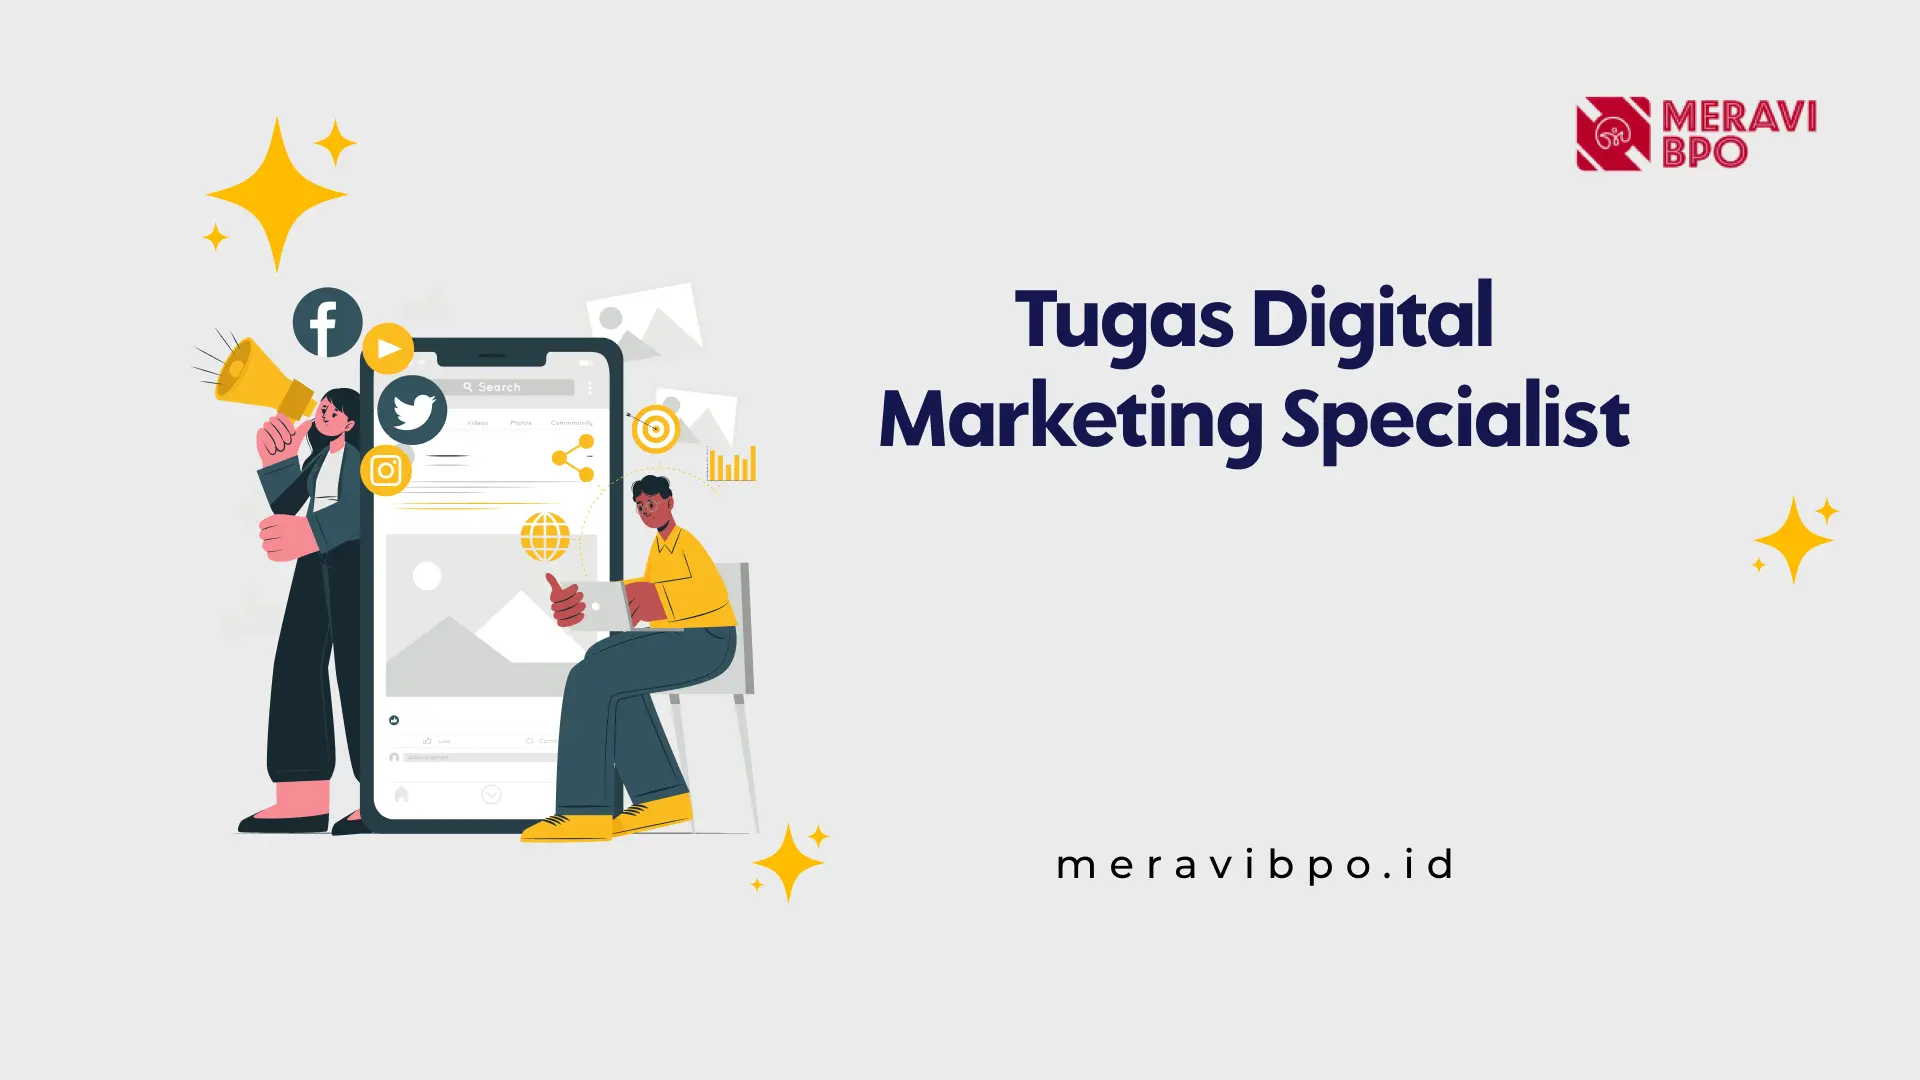 Tugas Digital Marketing Specialist